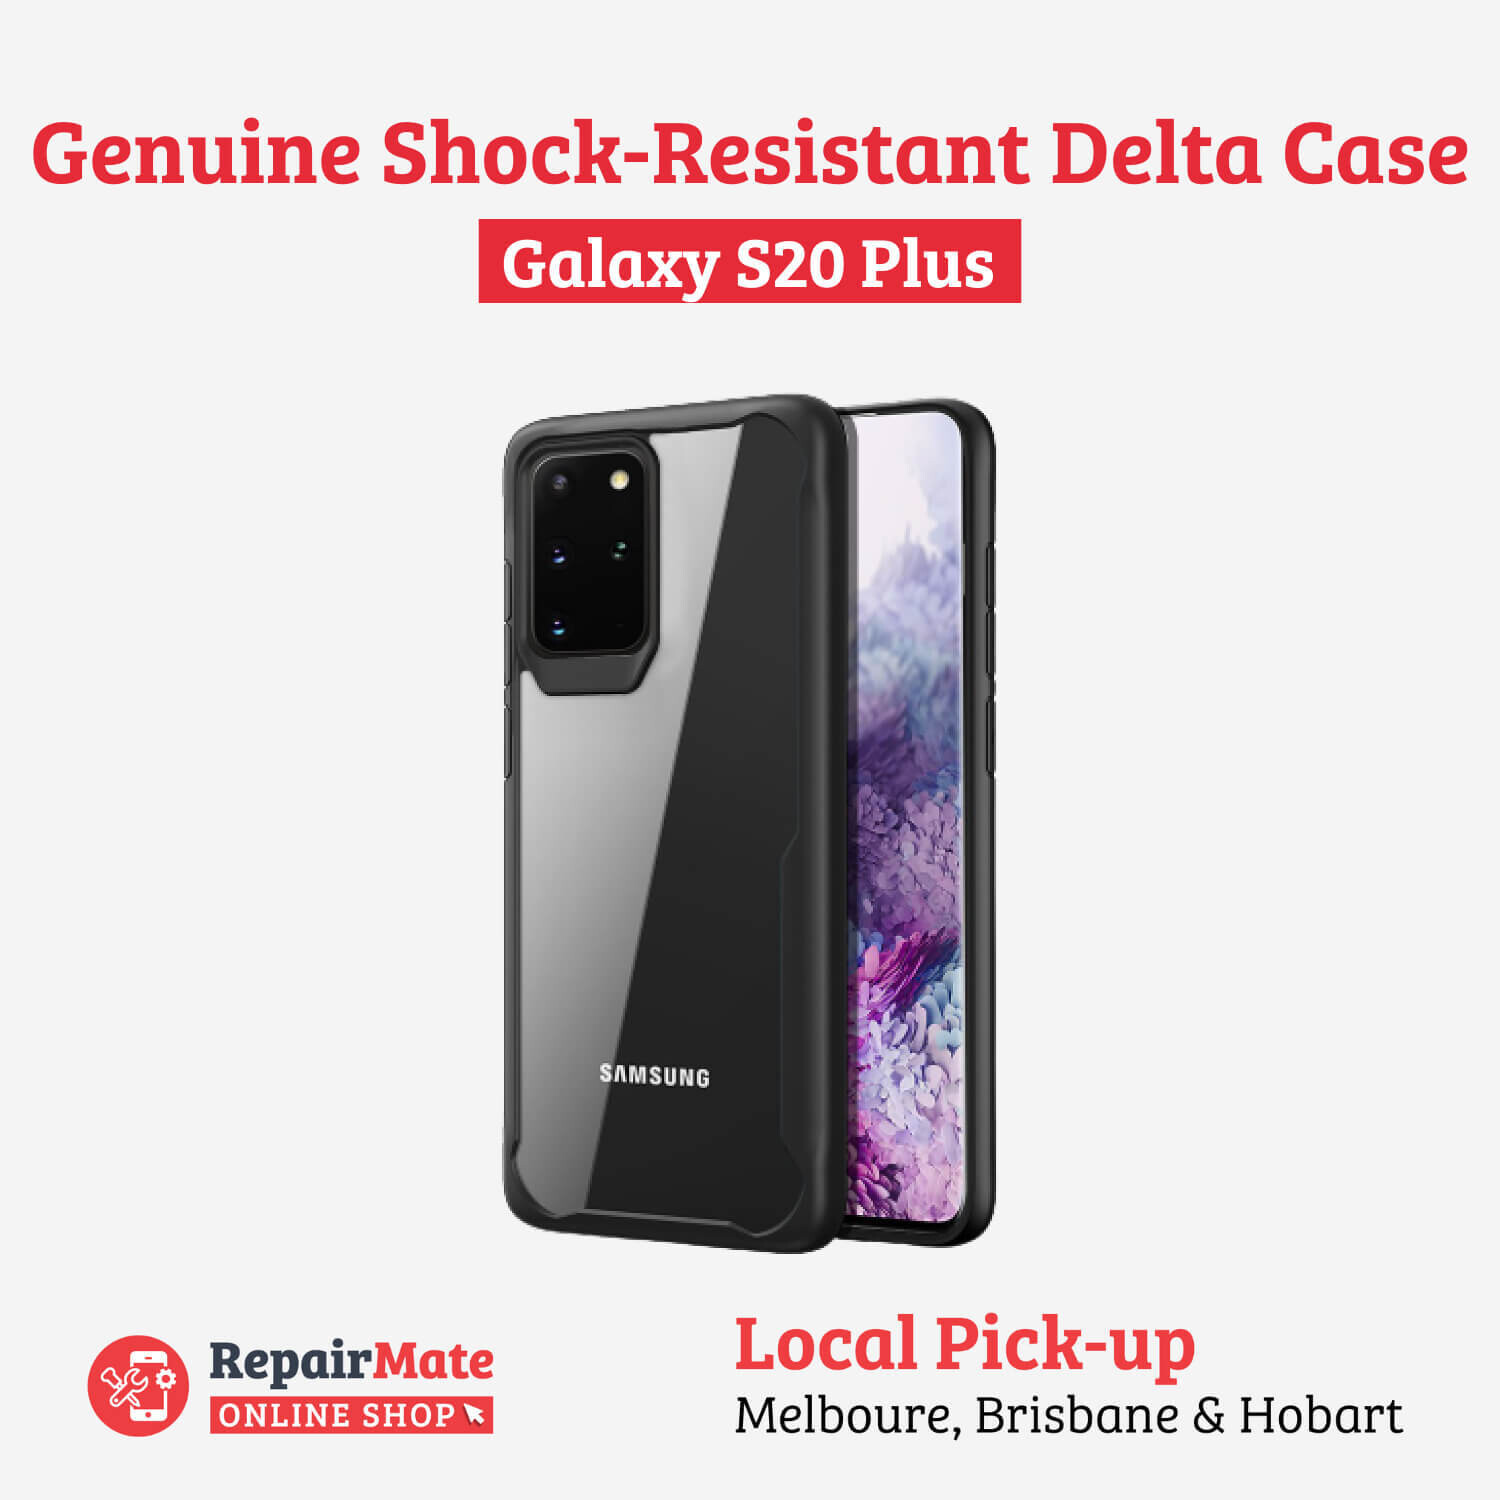 Samsung Galaxy S20 Plus Genuine Shock-Resistant Delta Case